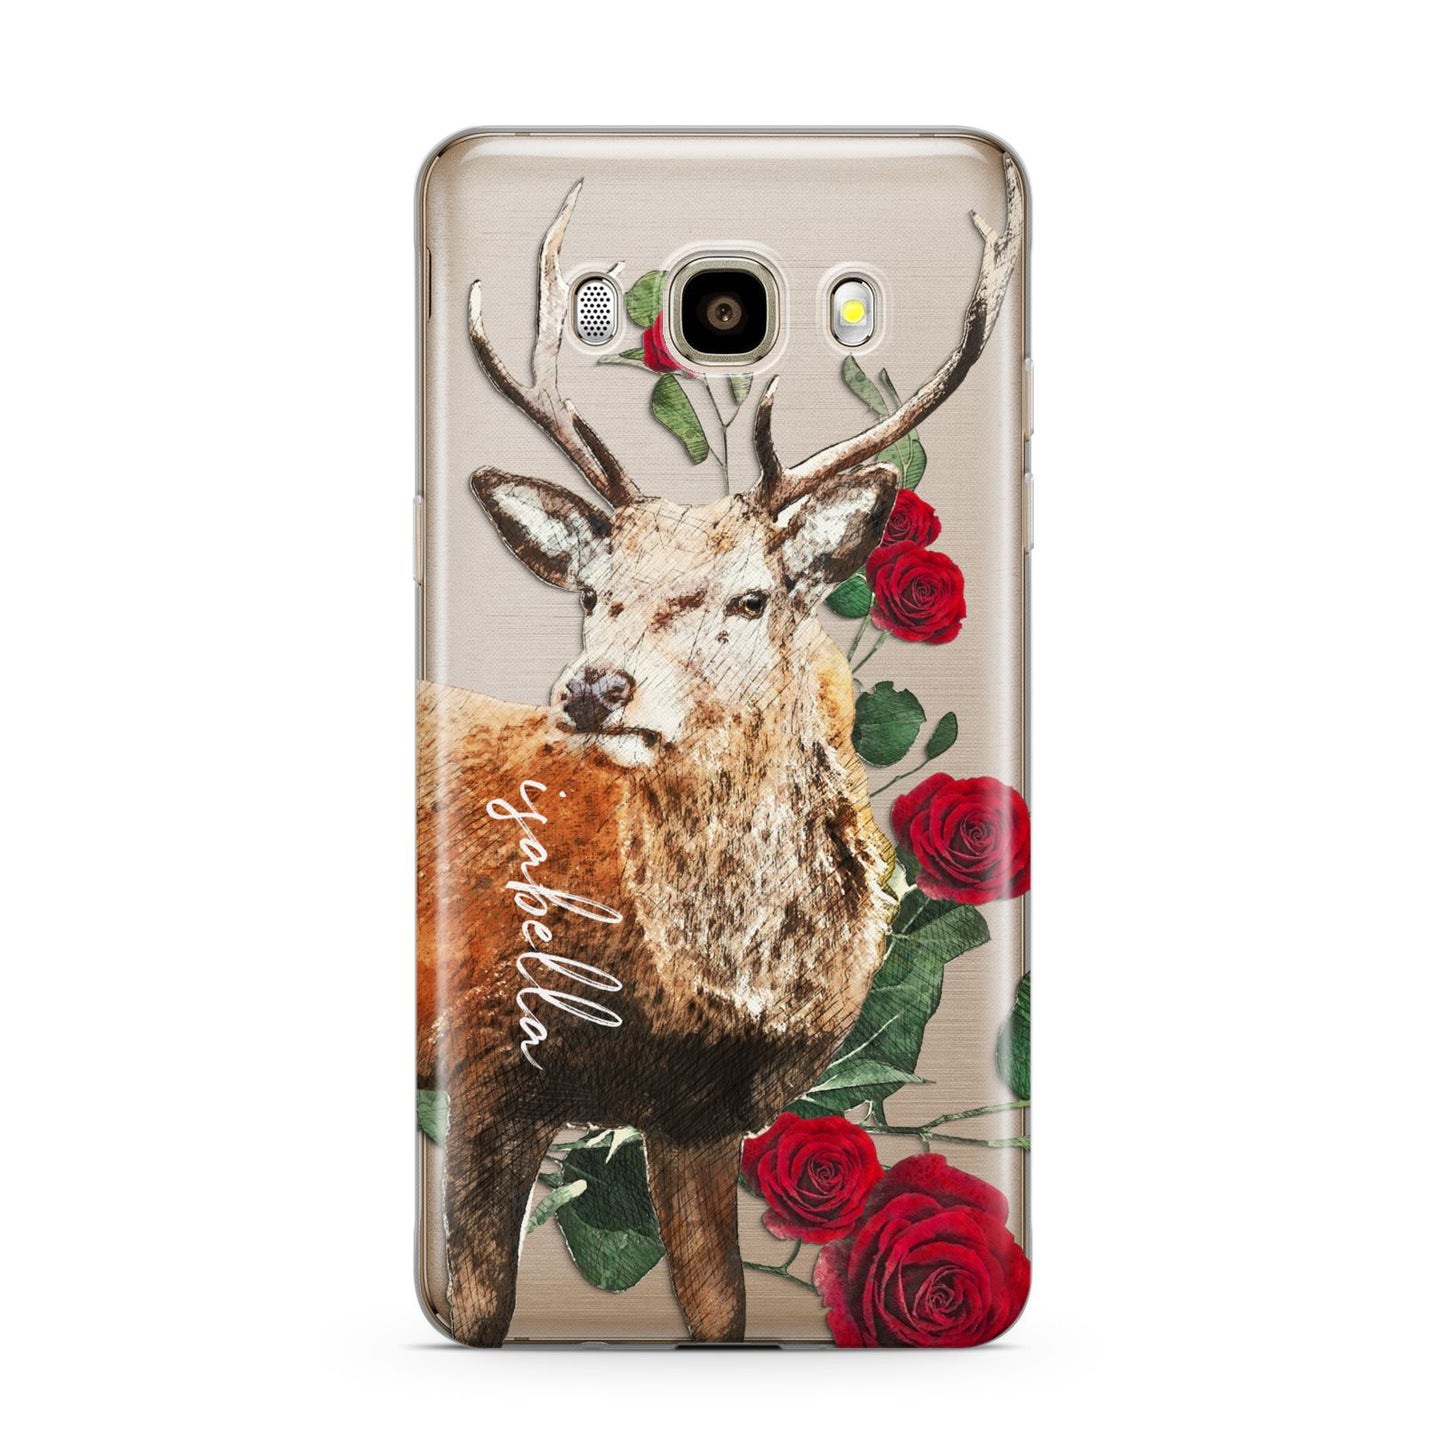 Personalised Deer Name Samsung Galaxy J7 2016 Case on gold phone